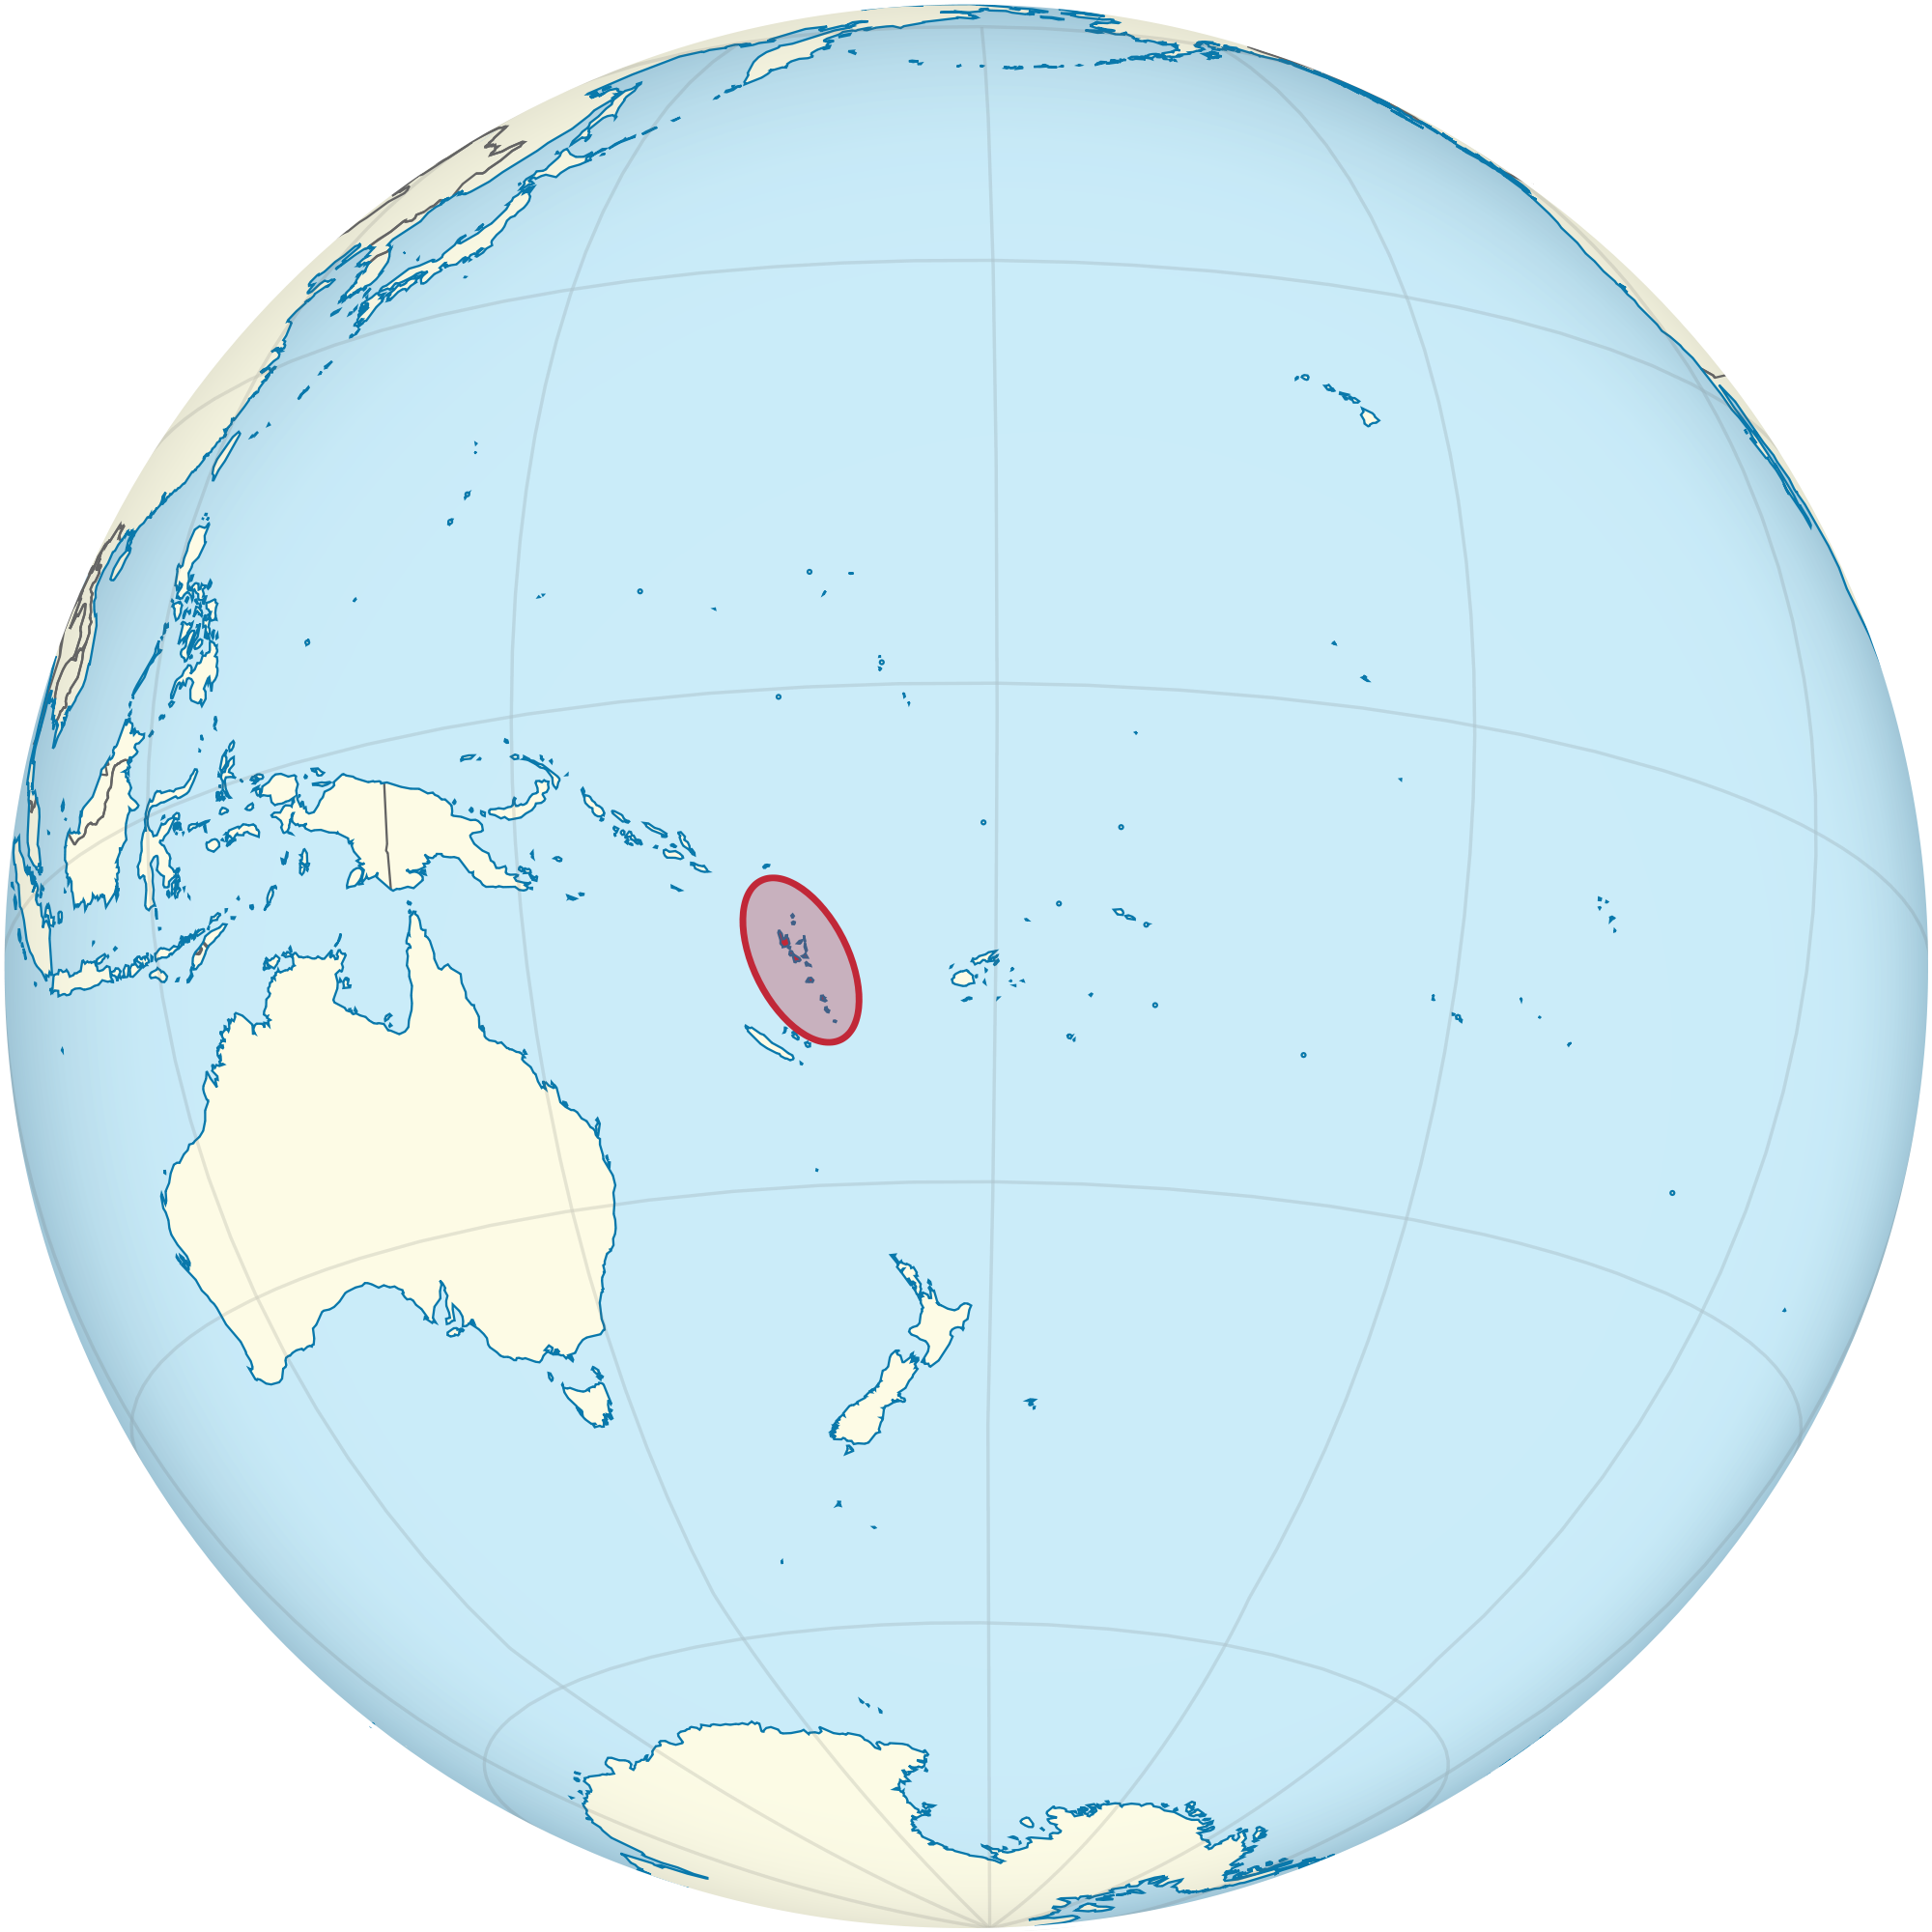 Vanuatu on the globe